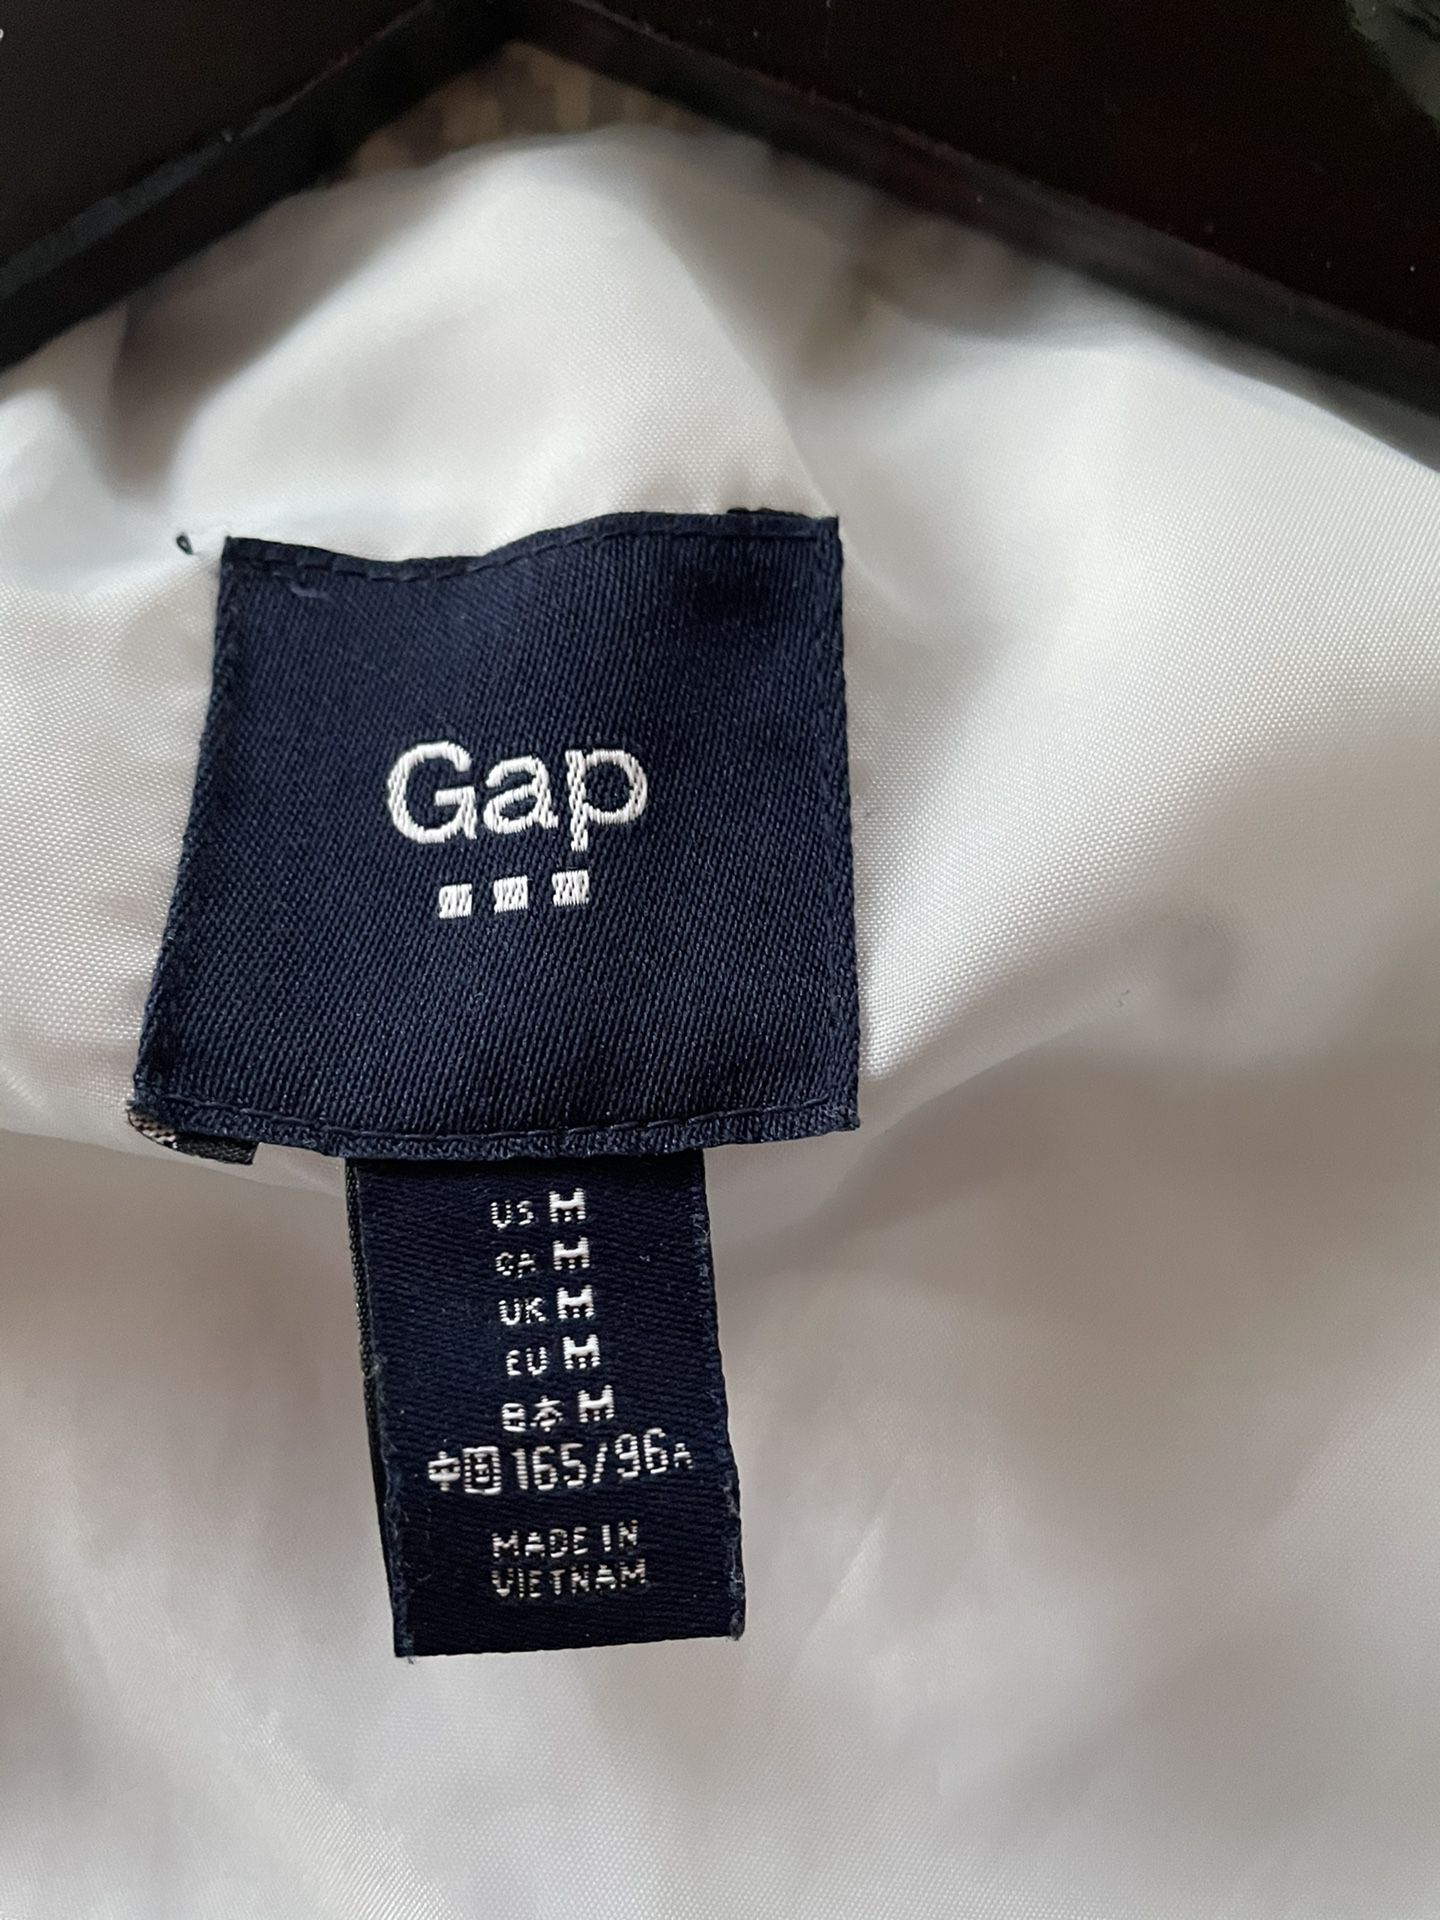 2 Medium Women’s Vests - From Gap